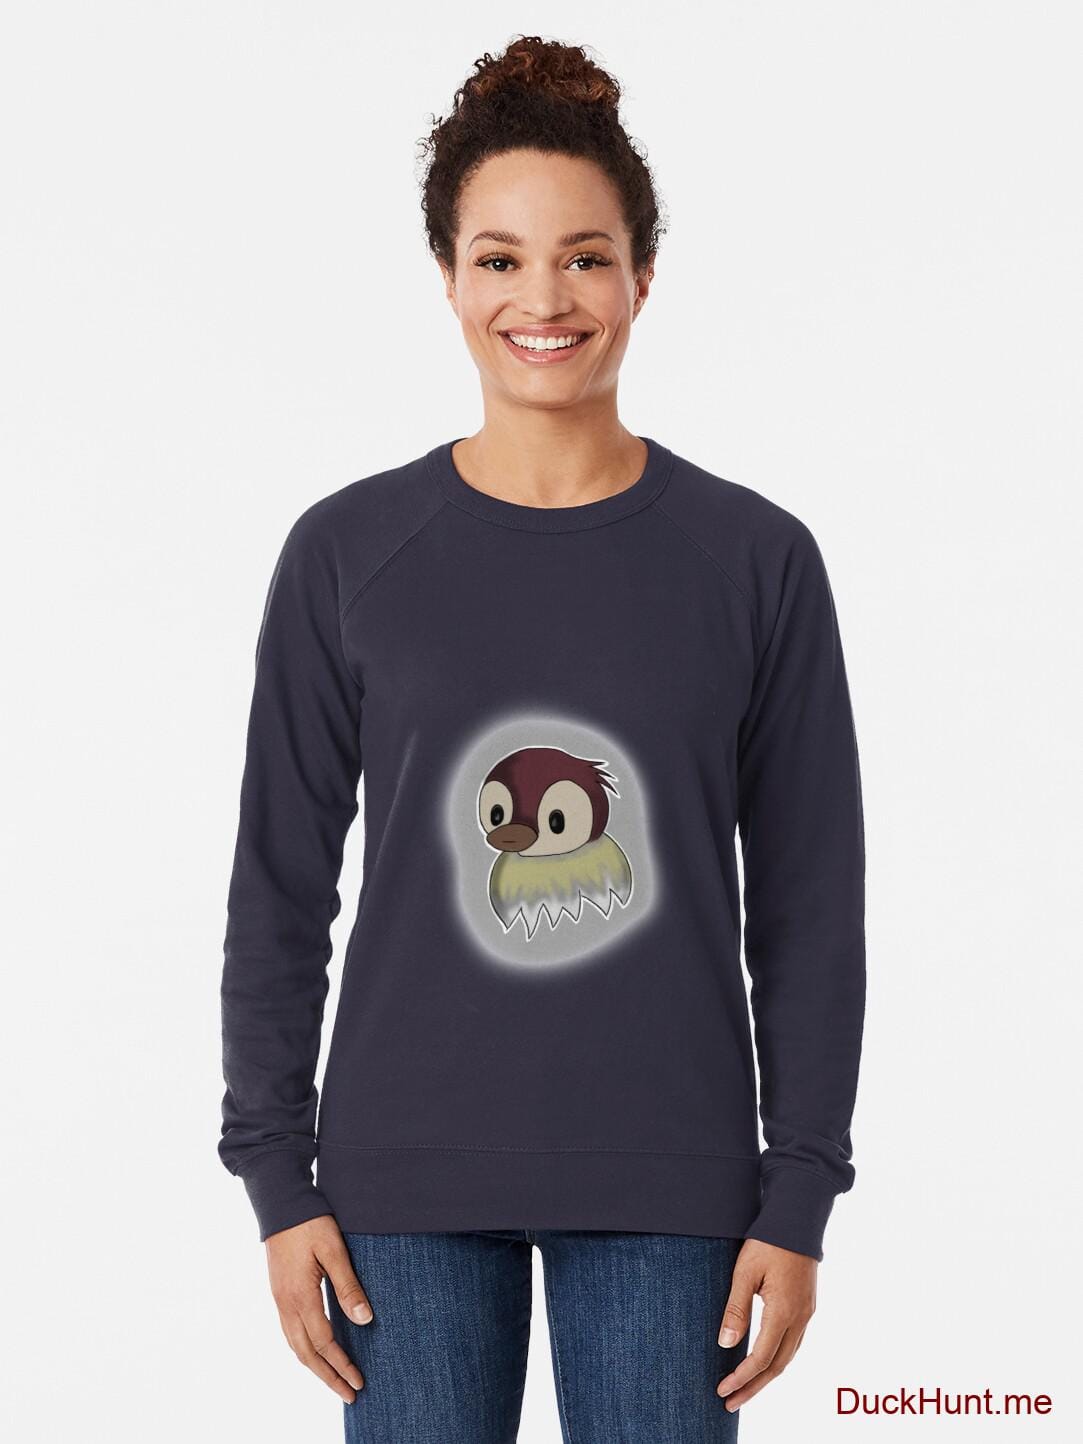 Ghost Duck (foggy) Navy Lightweight Sweatshirt alternative image 1